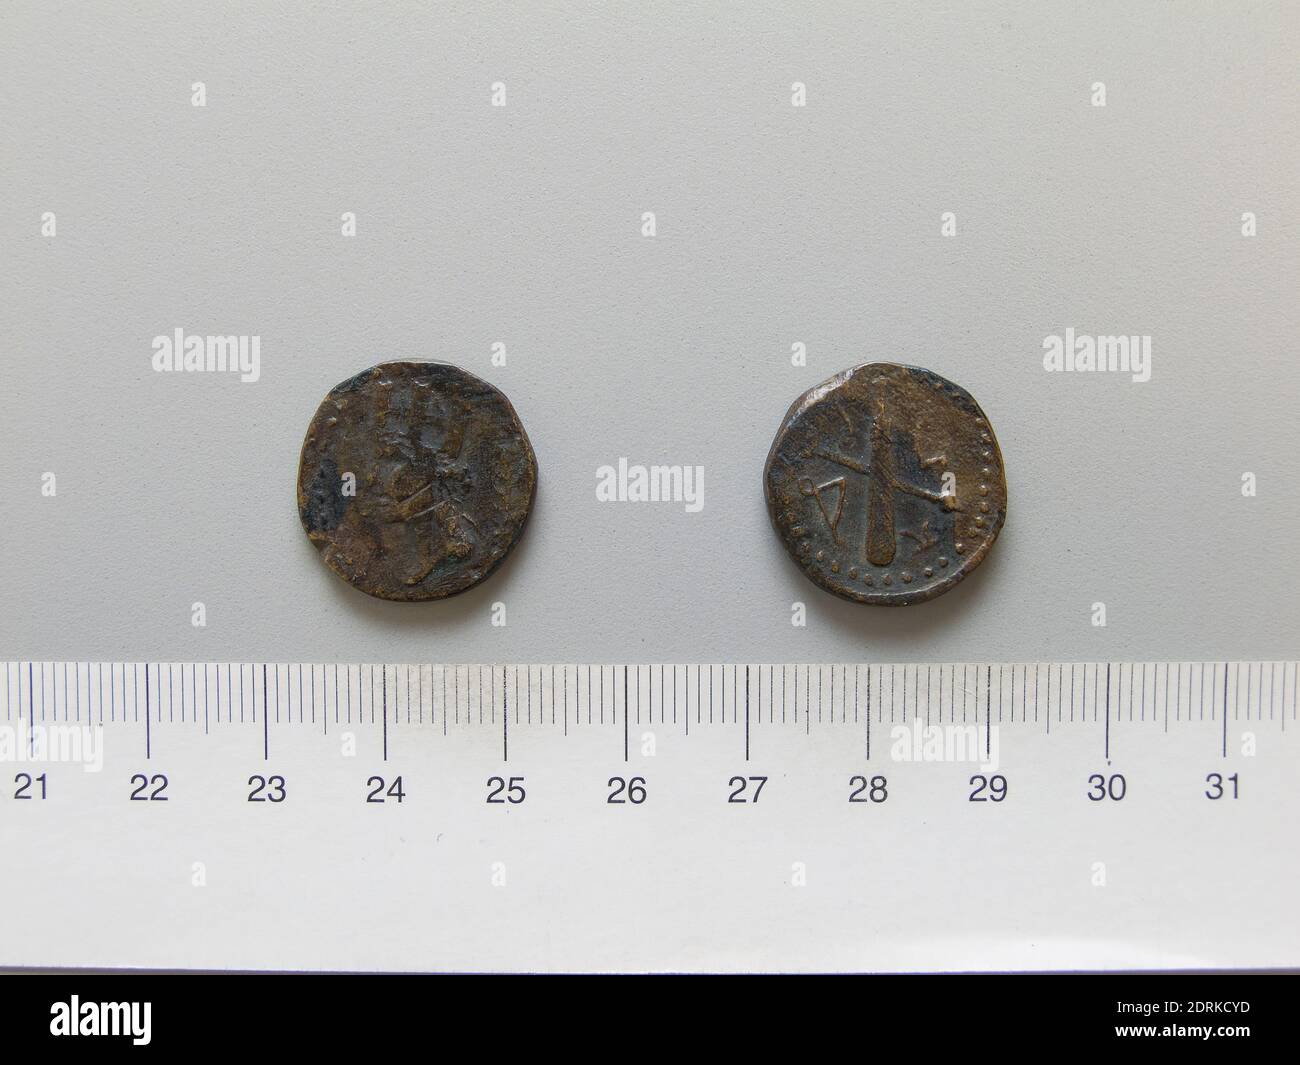 Mint: Leptis Magna, Mint: Sabratha, Coin from Leptis Magna; Sabratha, 1st century B.C., Bronze, 5.755 g, 5:00, 20 mm, Made in Leptis Magna, Syrtica, Roman, 1st century B.C., Numismatics Stock Photo